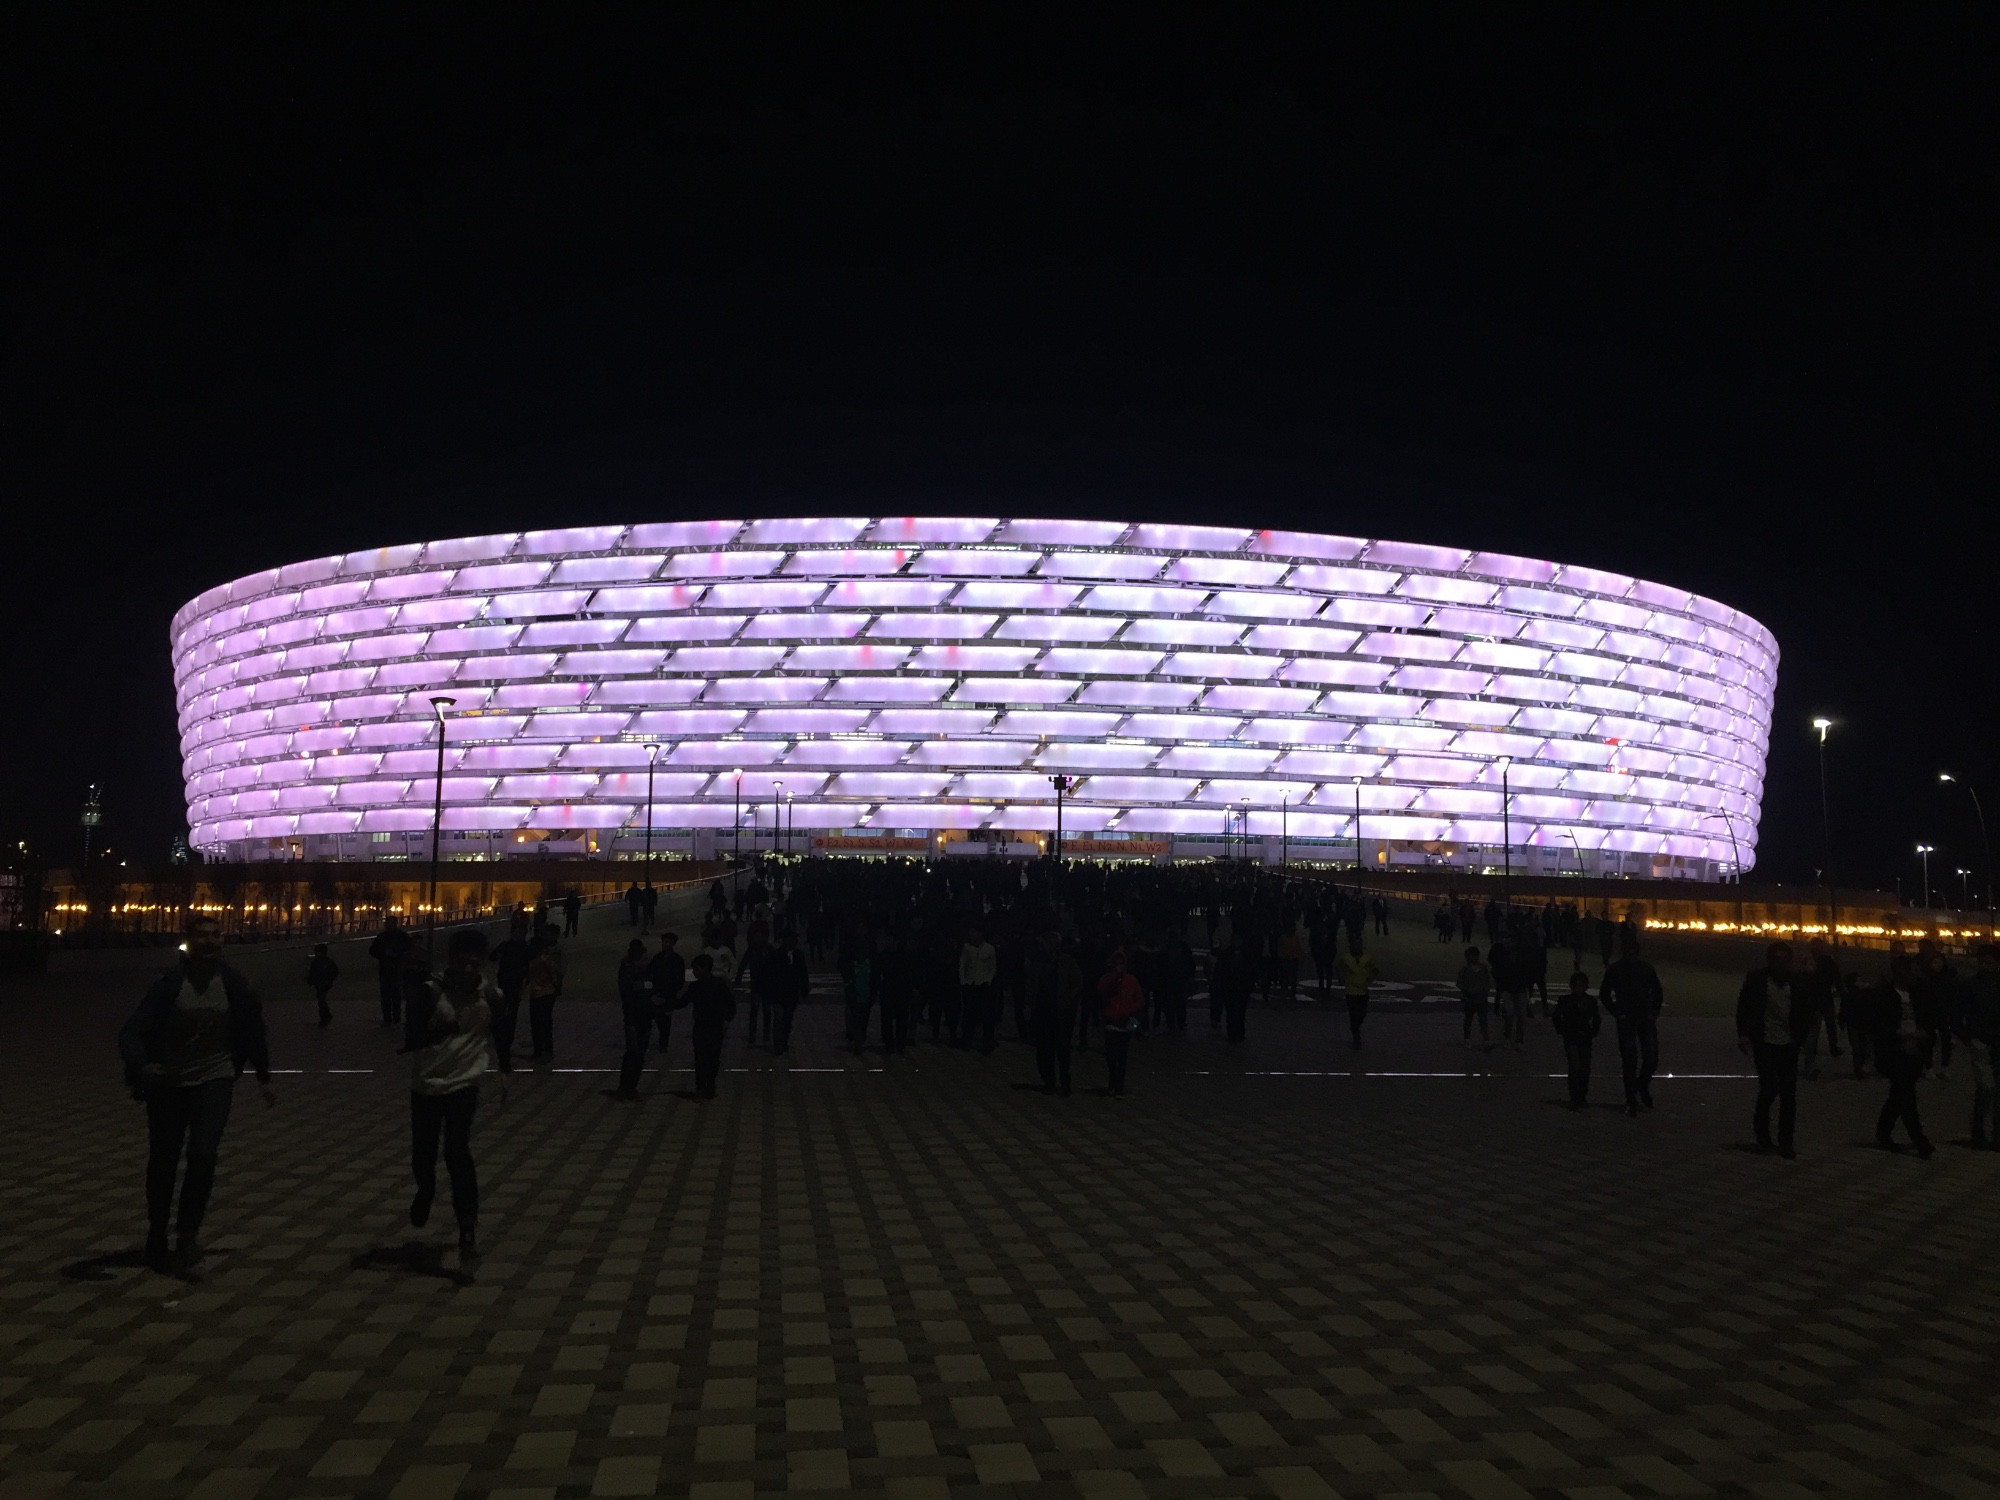 Stadium of Europe Championship 2021